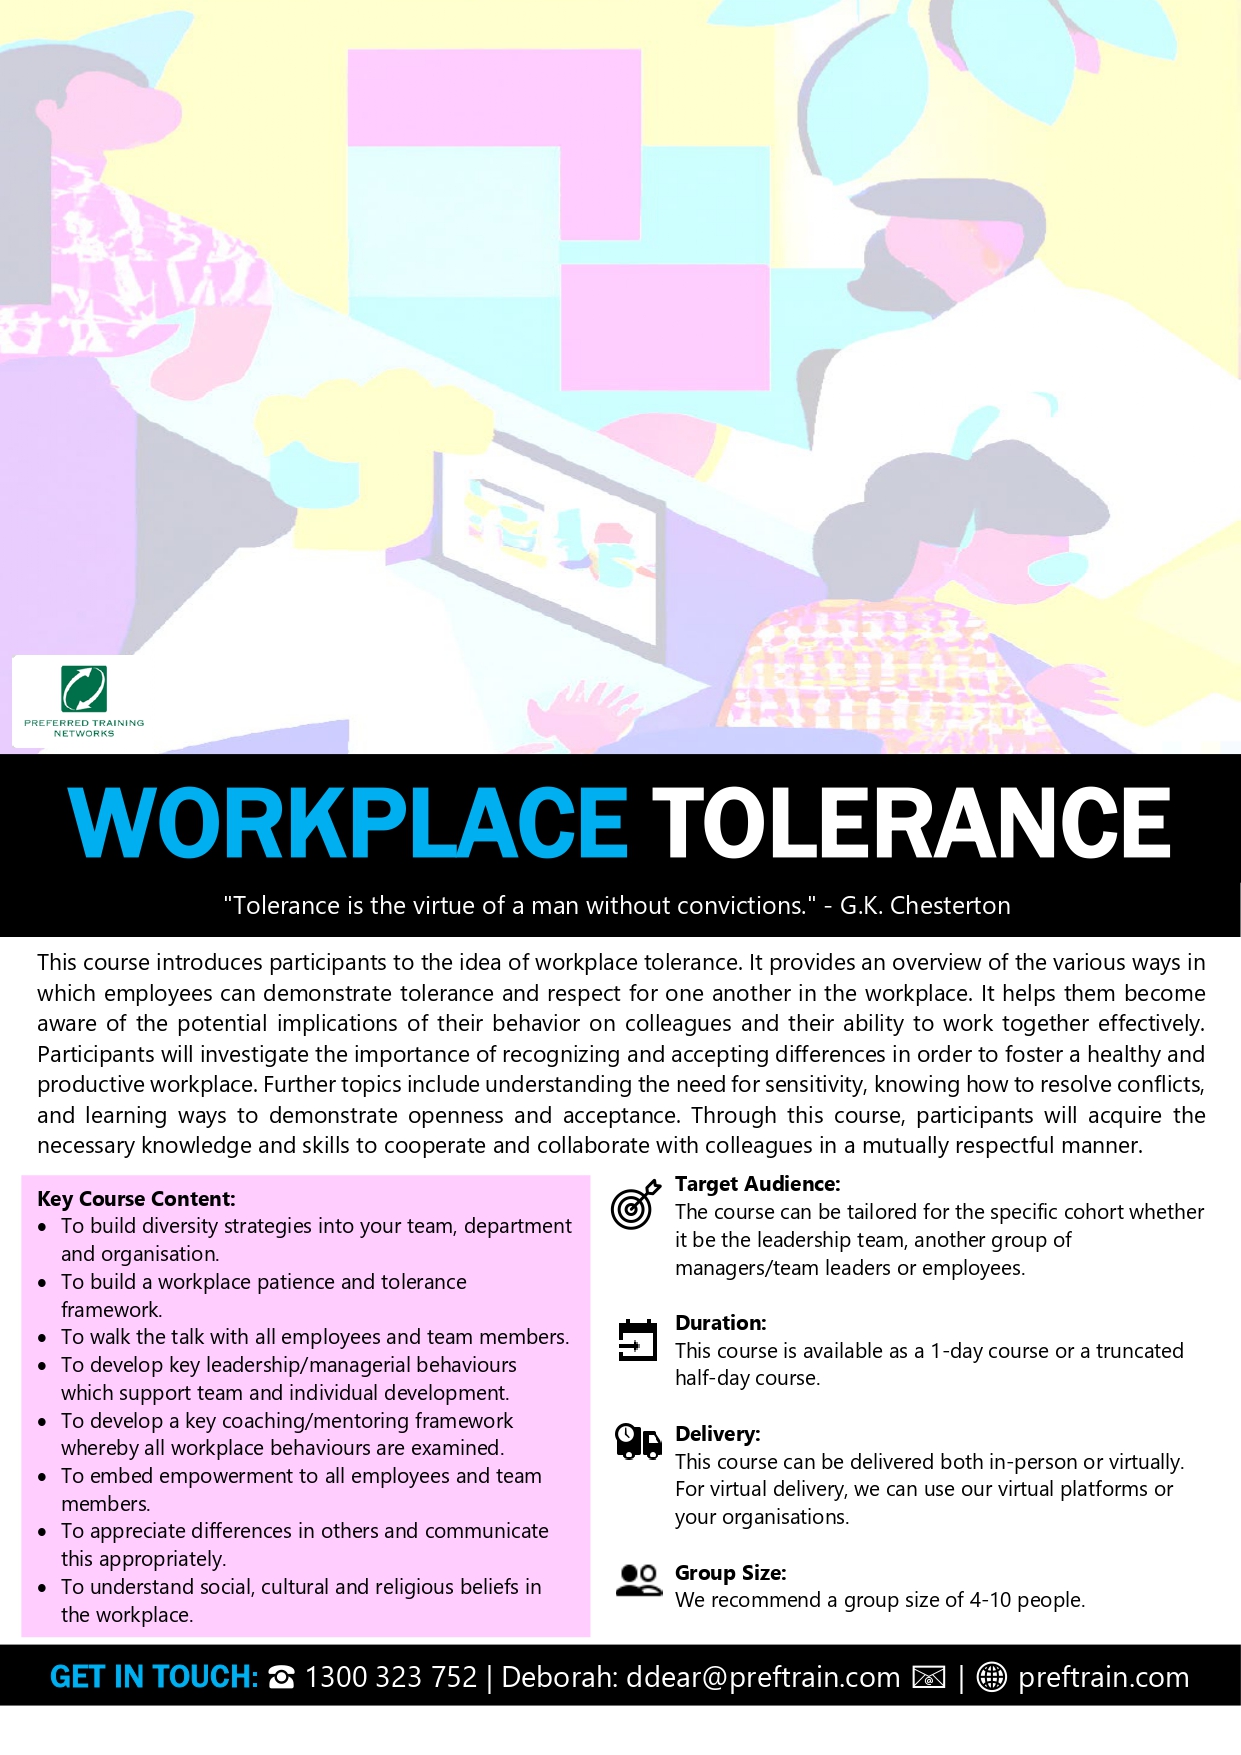 Workplace Tolerance Training Course